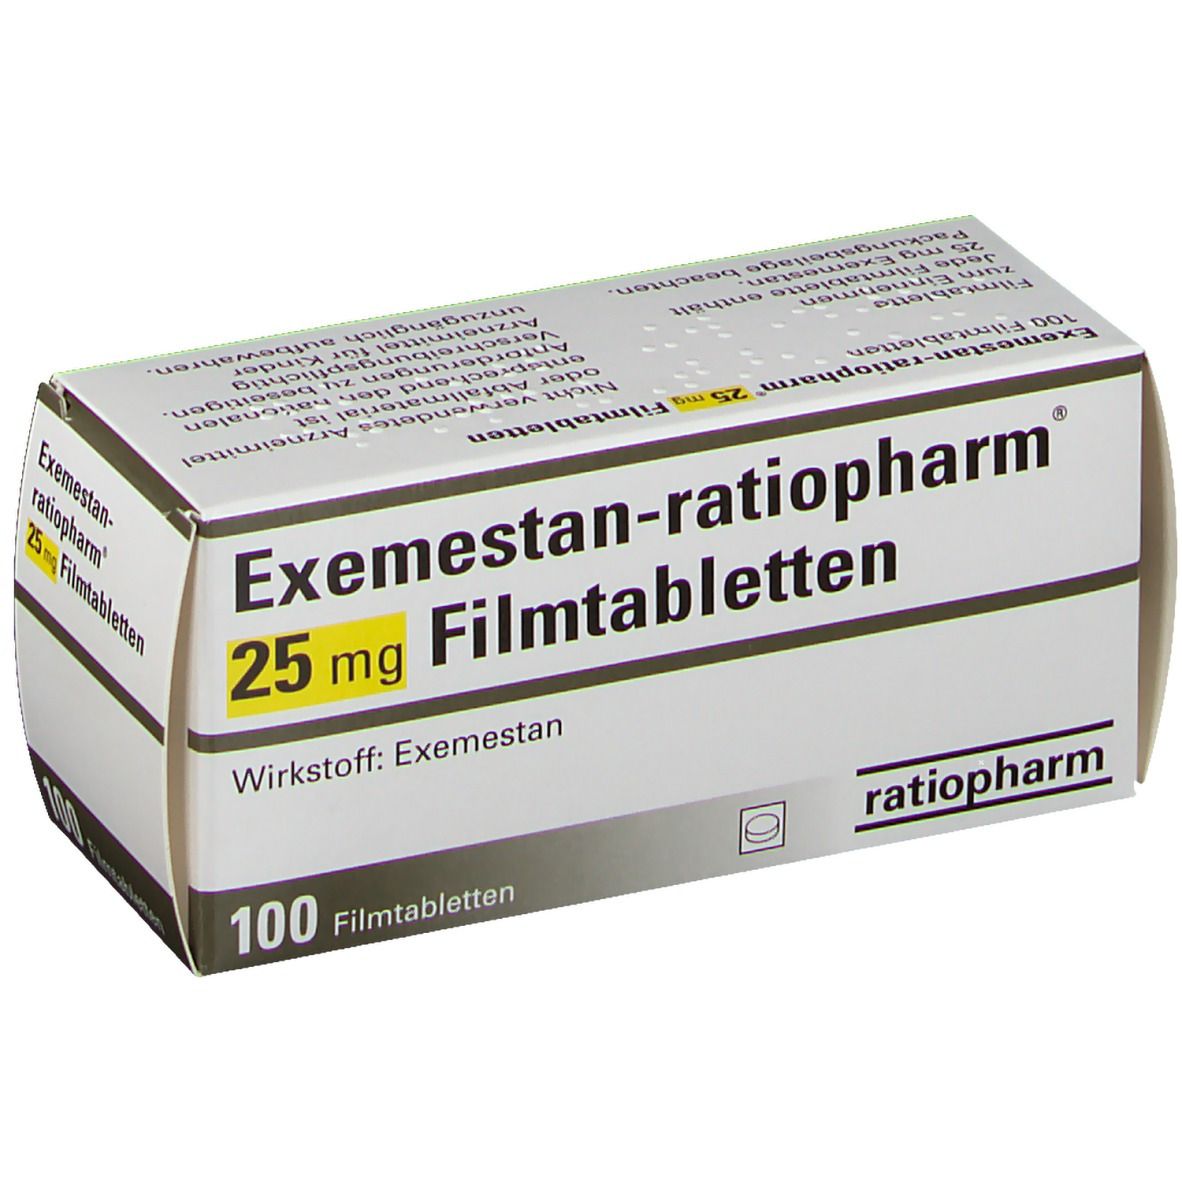 Exemestan-ratiopharm® 25 mg